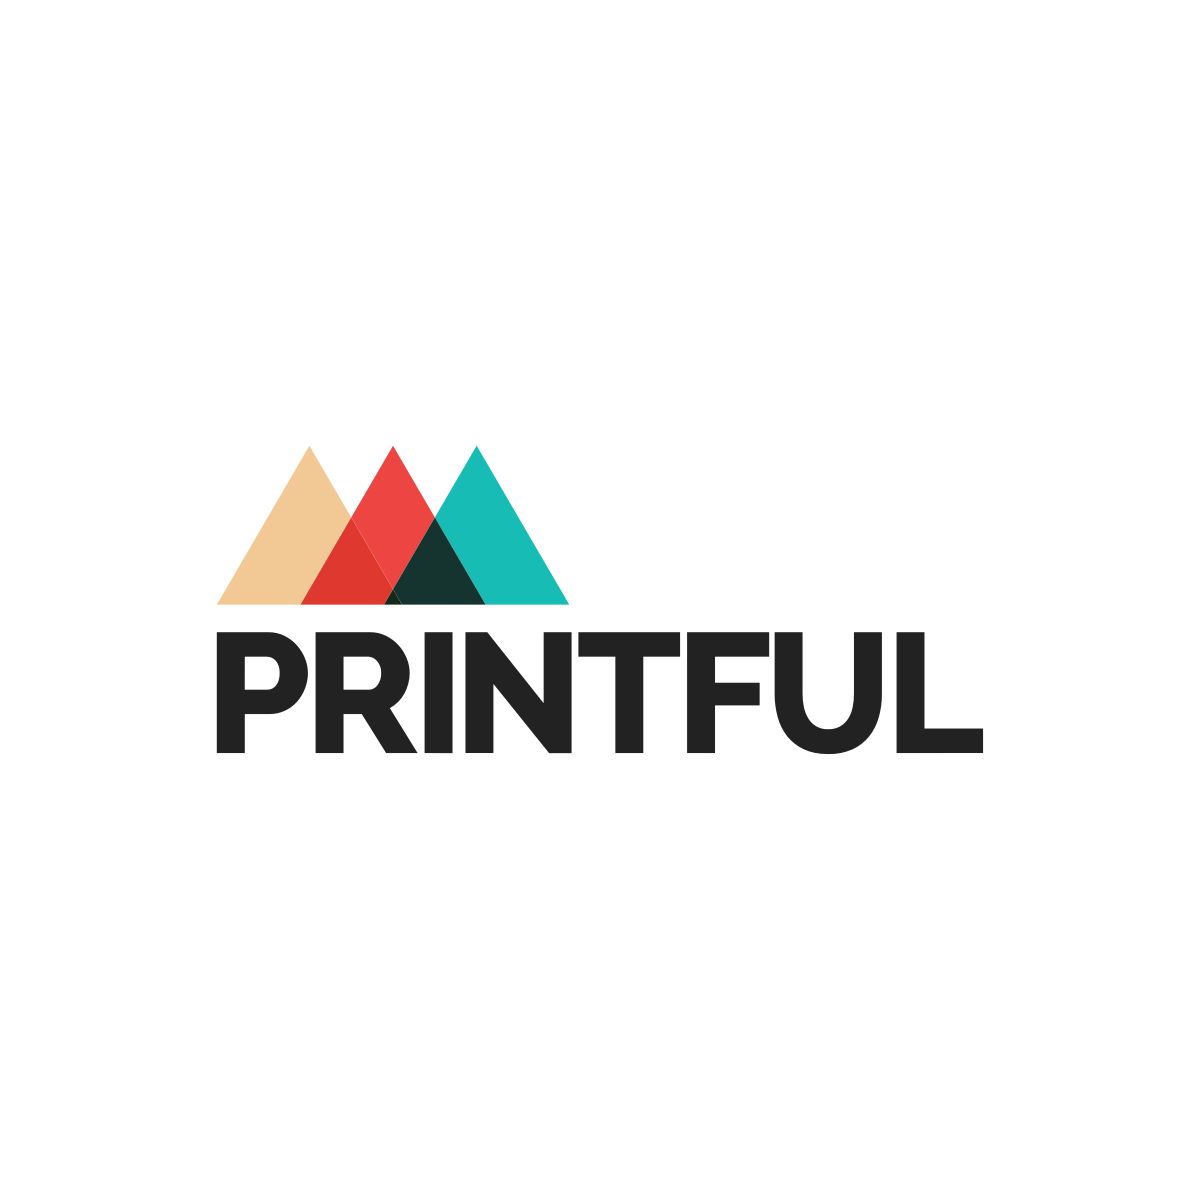 Printful Company Profile